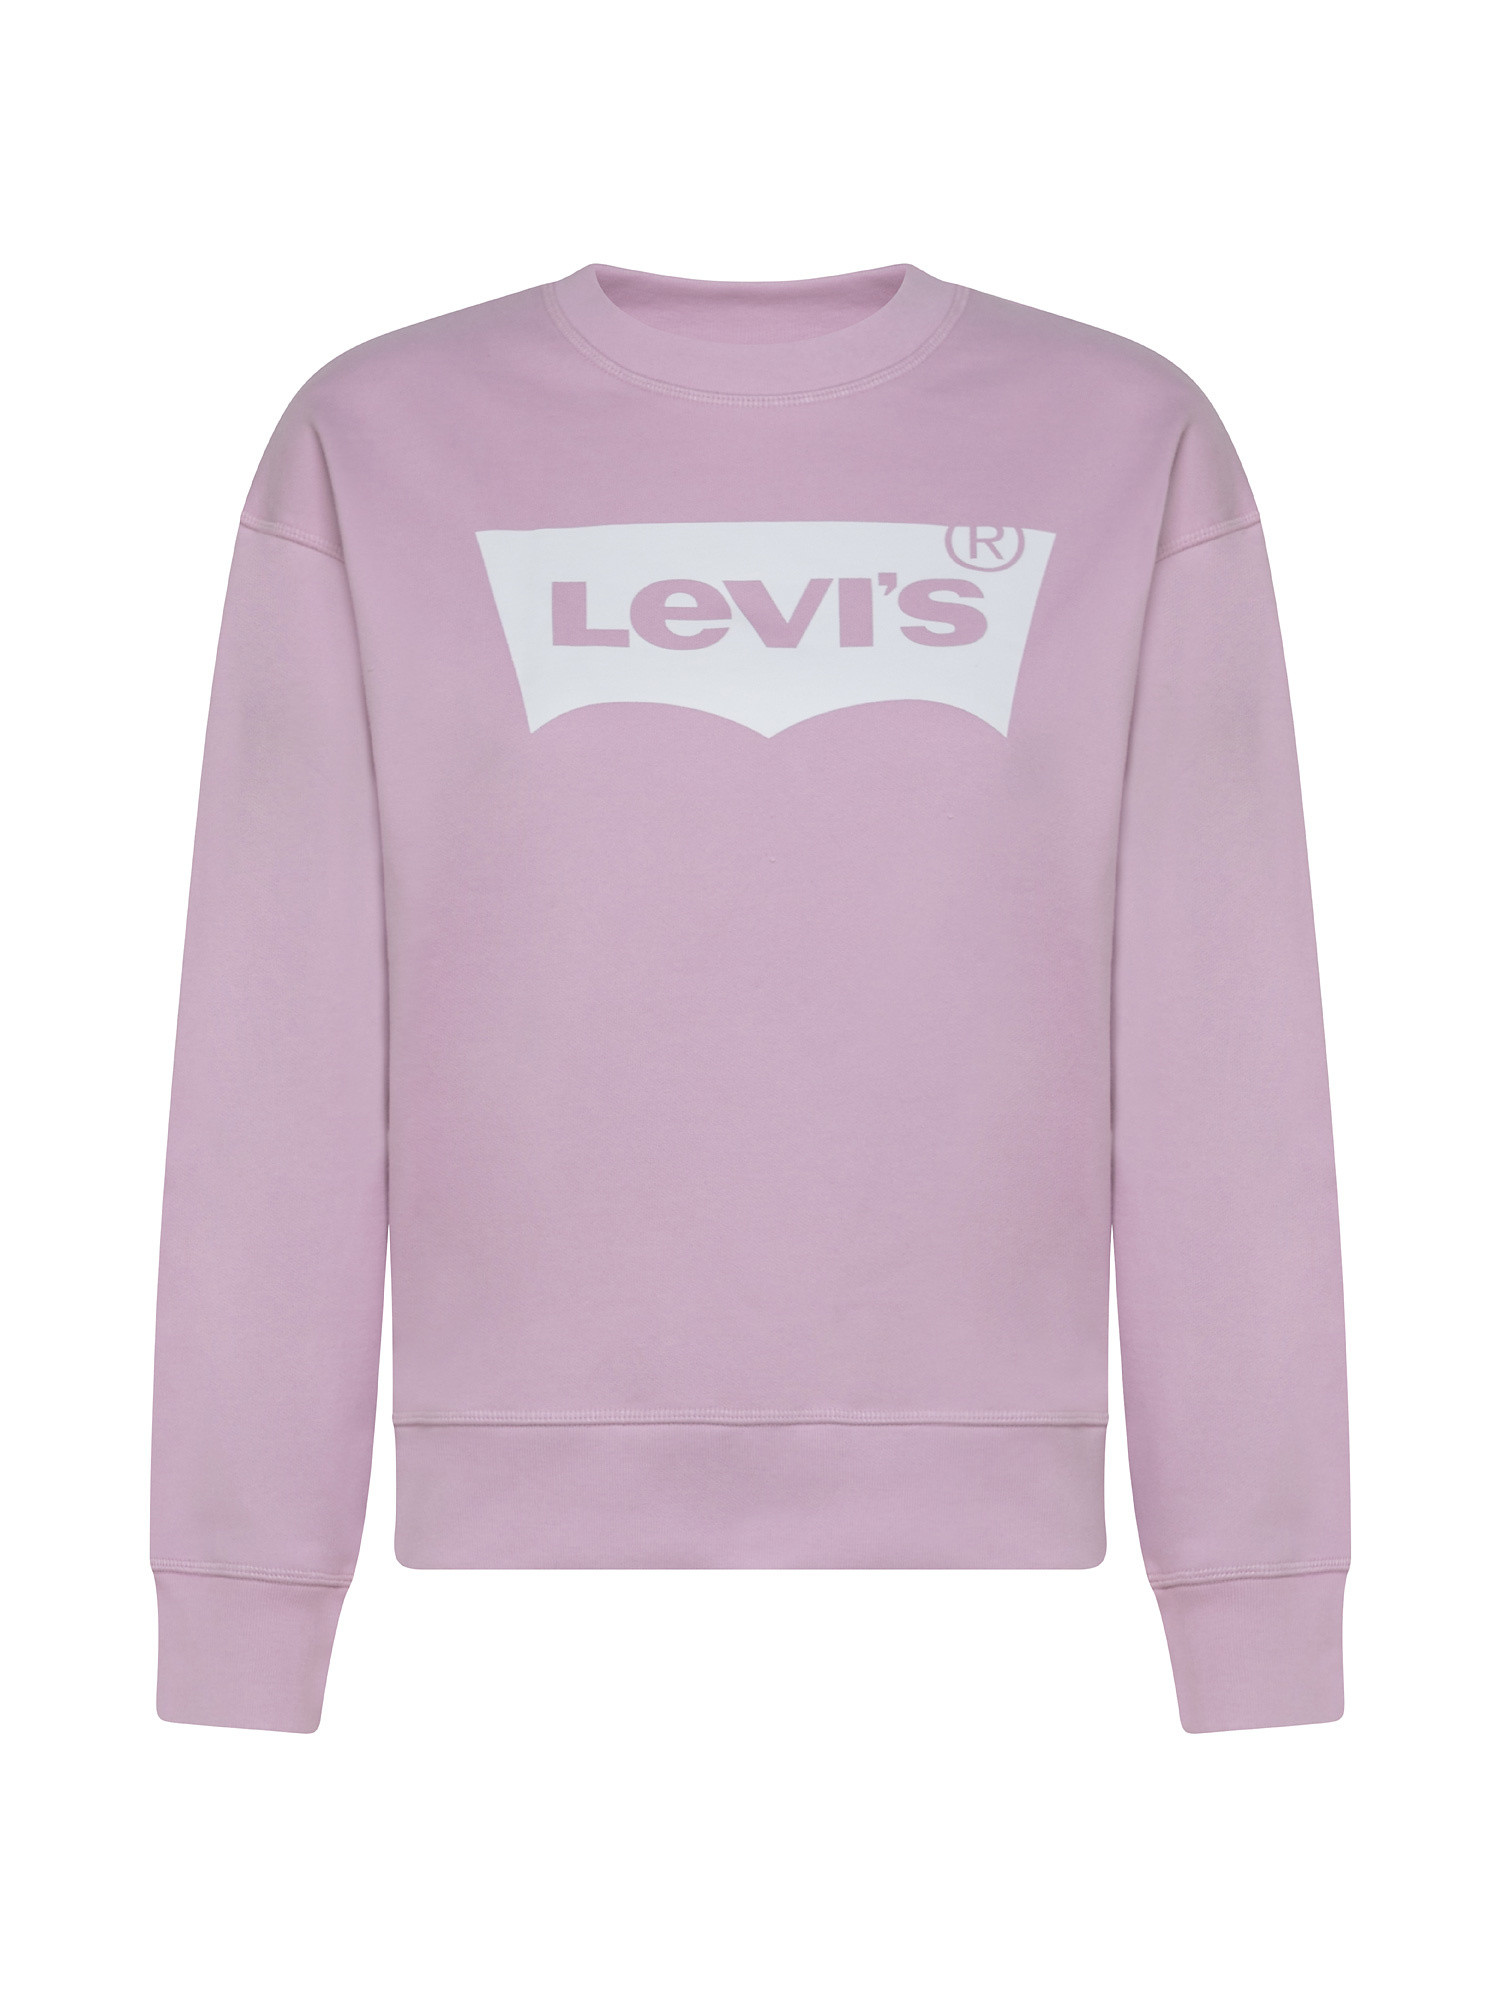 Graphic Standard crewneck sweatshirt, Pink, large image number 0